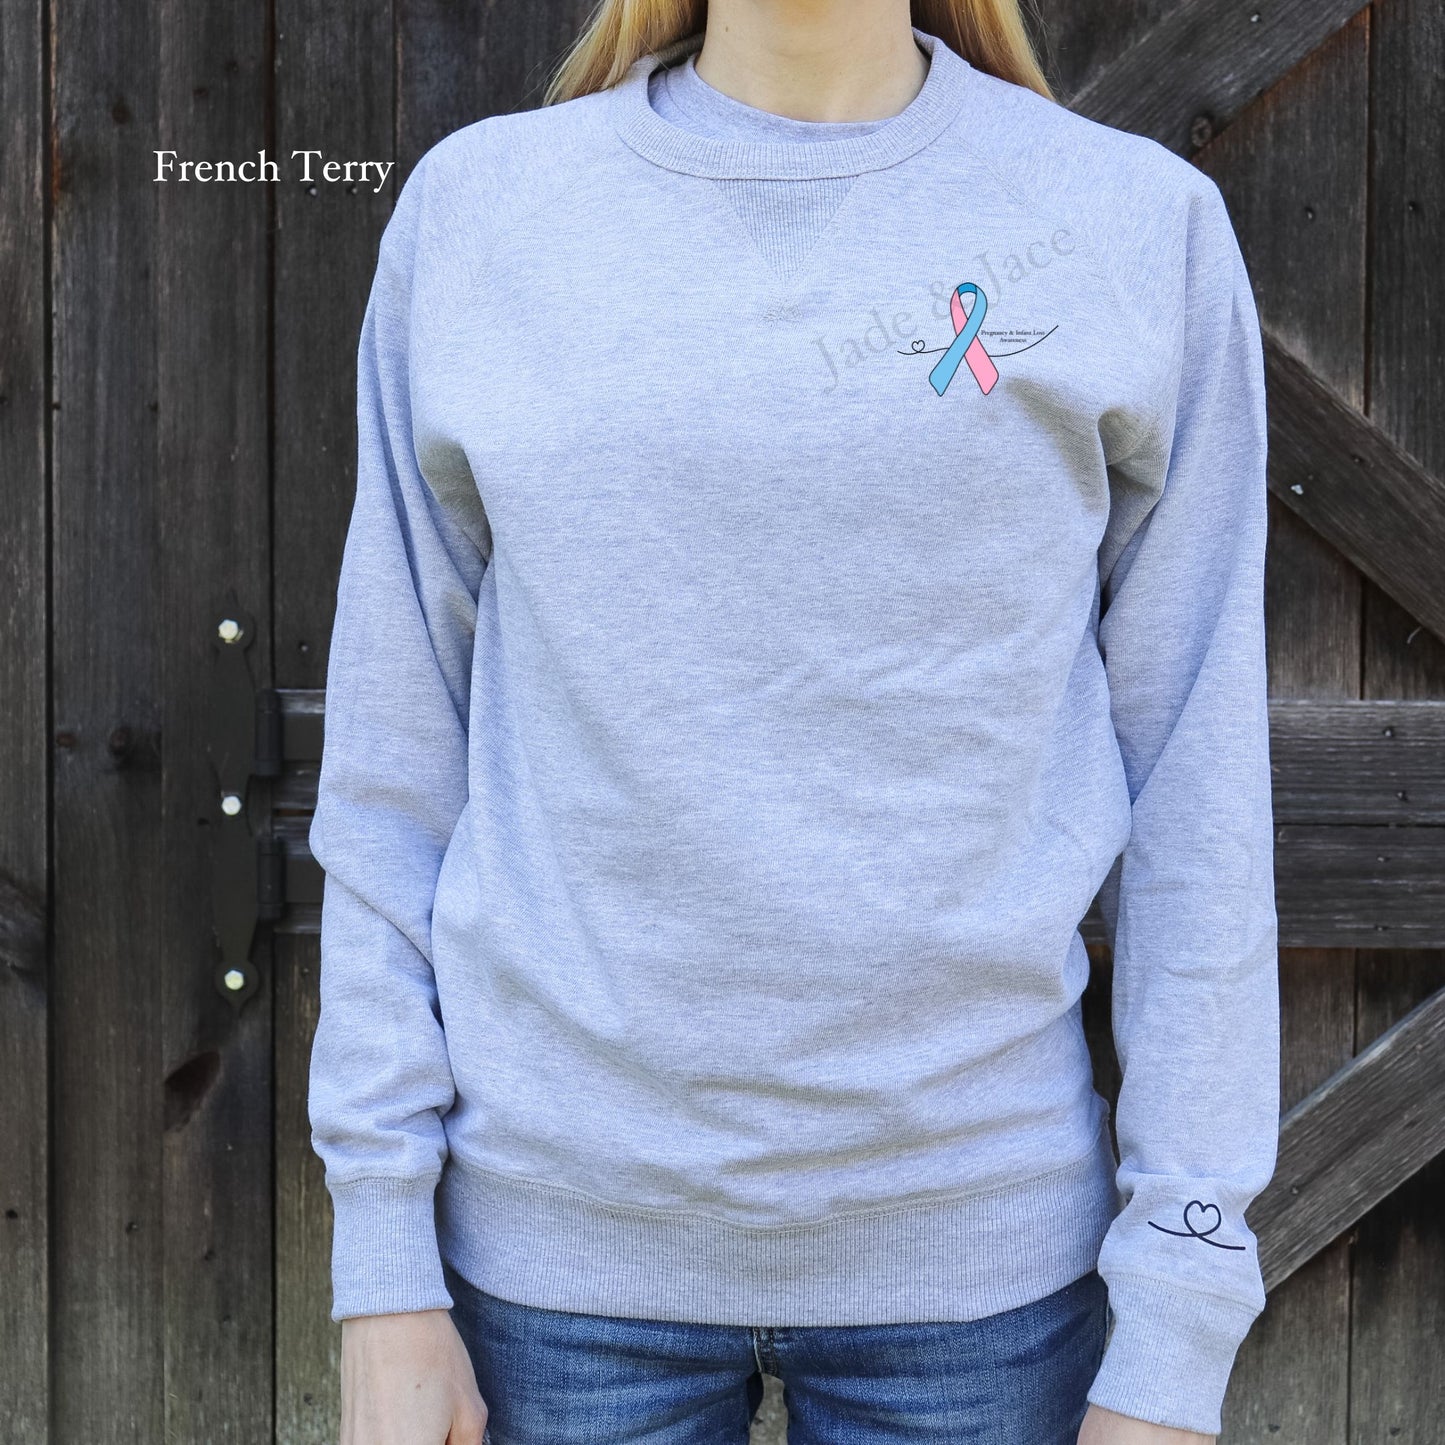 Infant & Pregnancy Loss Awareness Crewneck Sweatshirt